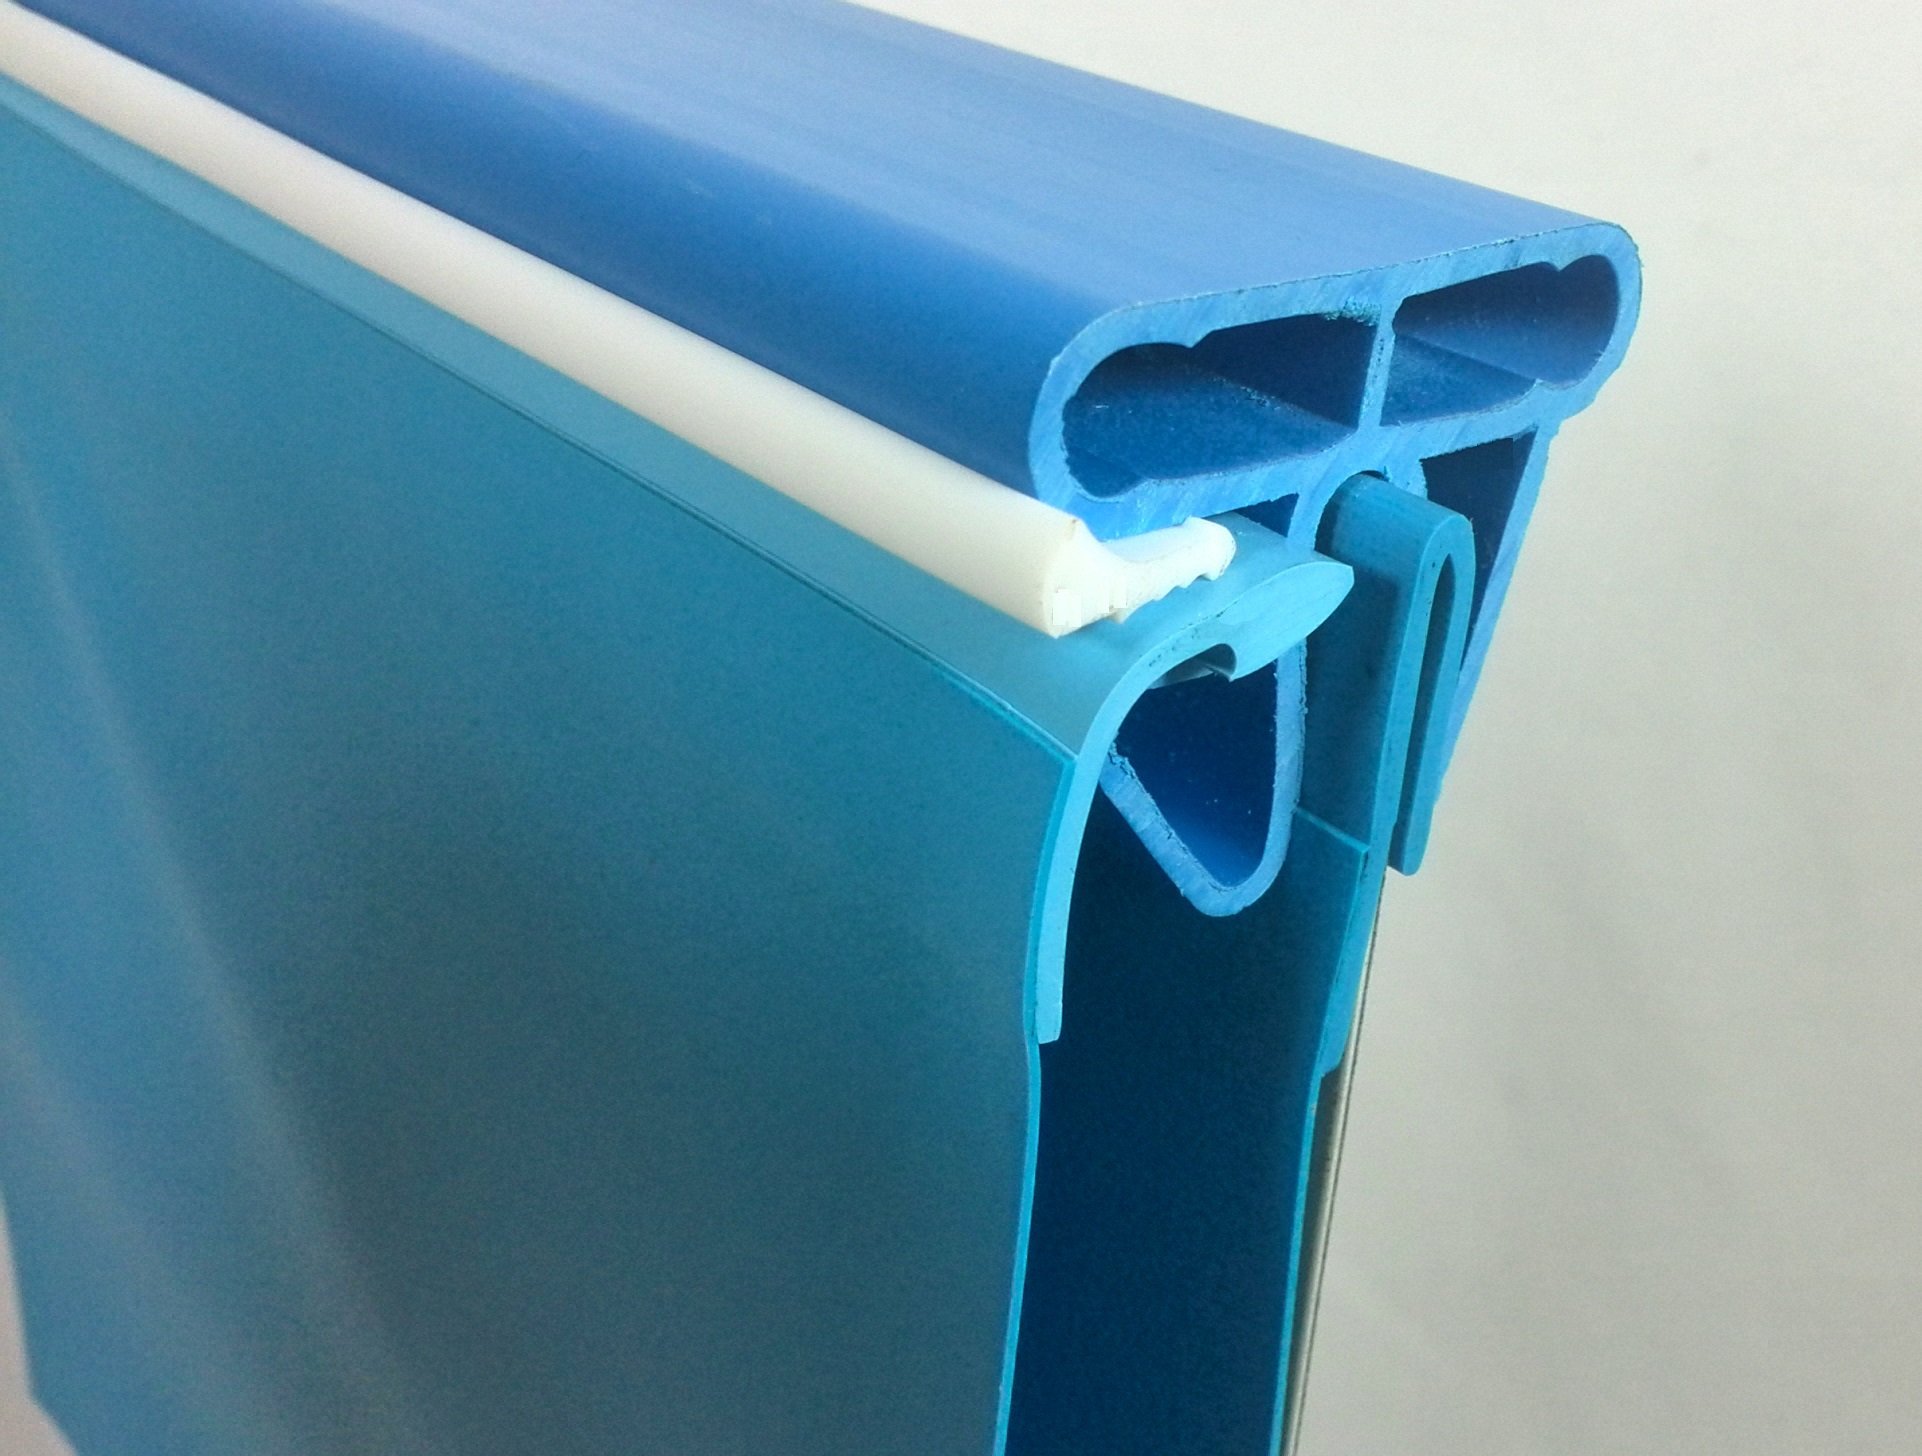 Stahlwandpool achtform Exklusiv 855x500x120 cm, Stahl 0,6 mm weiß, Folie 0,6 mm blau, Einhängebiese